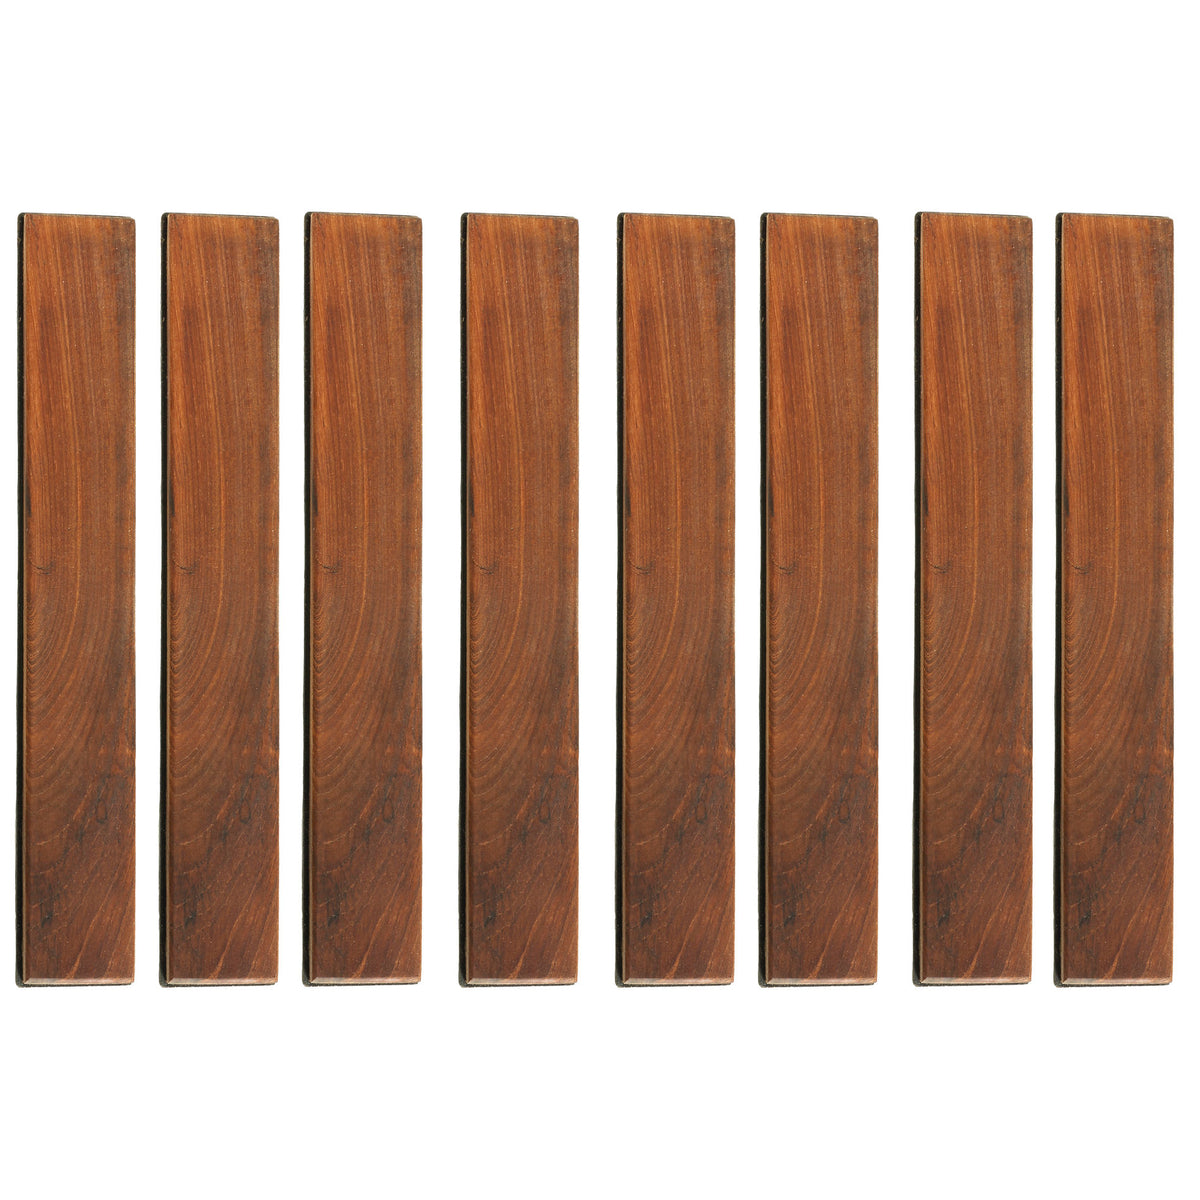 Bare Decor EZ-Floor End Pin-Side Trim Piece for Flooring in Solid Teak Wood (Set of 8)